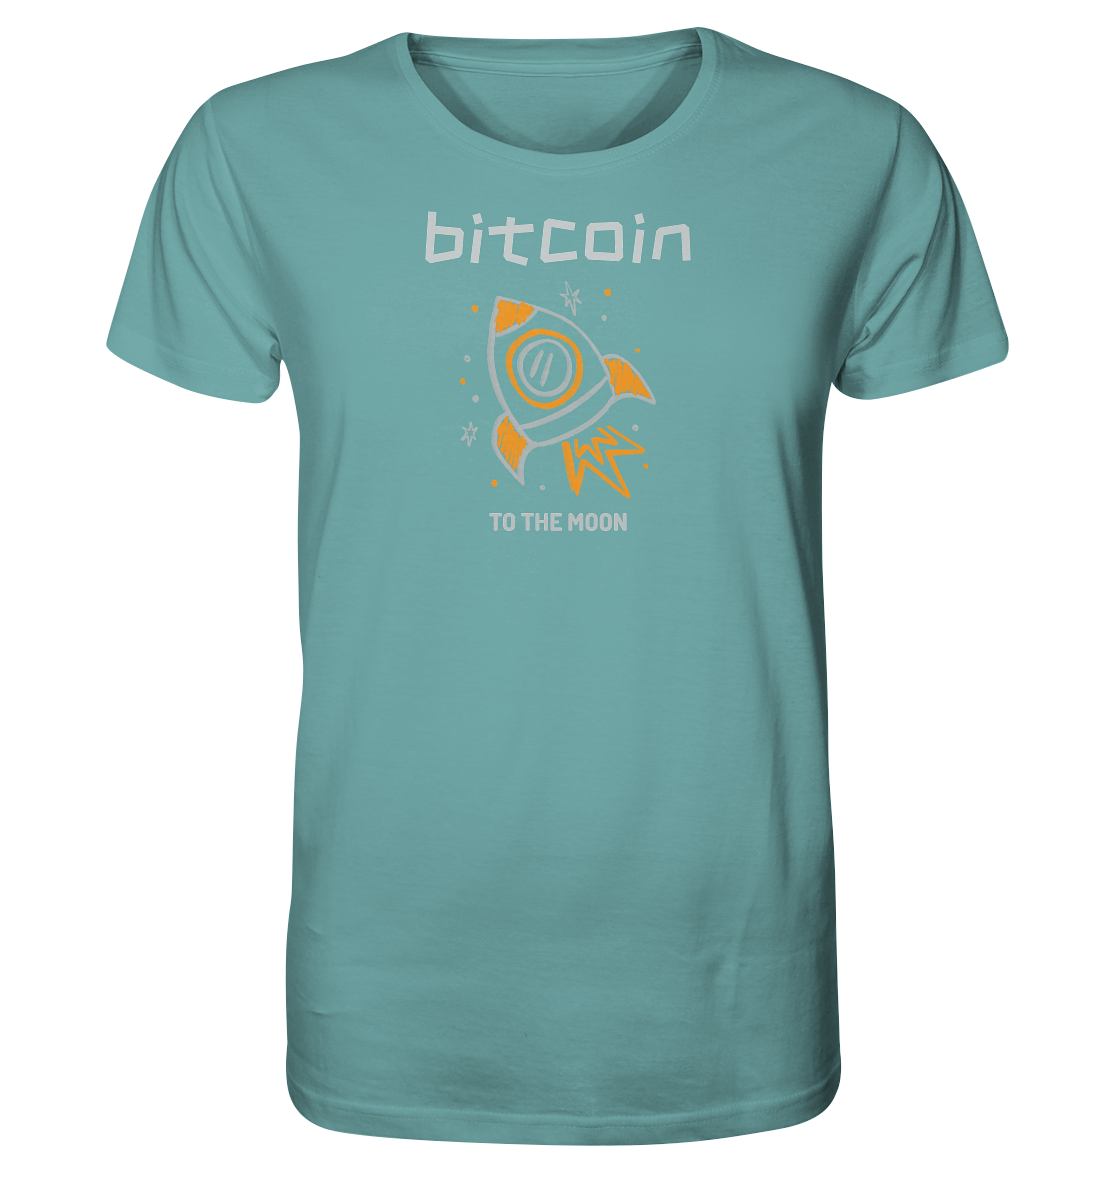 Bitcoin to the moon - Organic Shirt